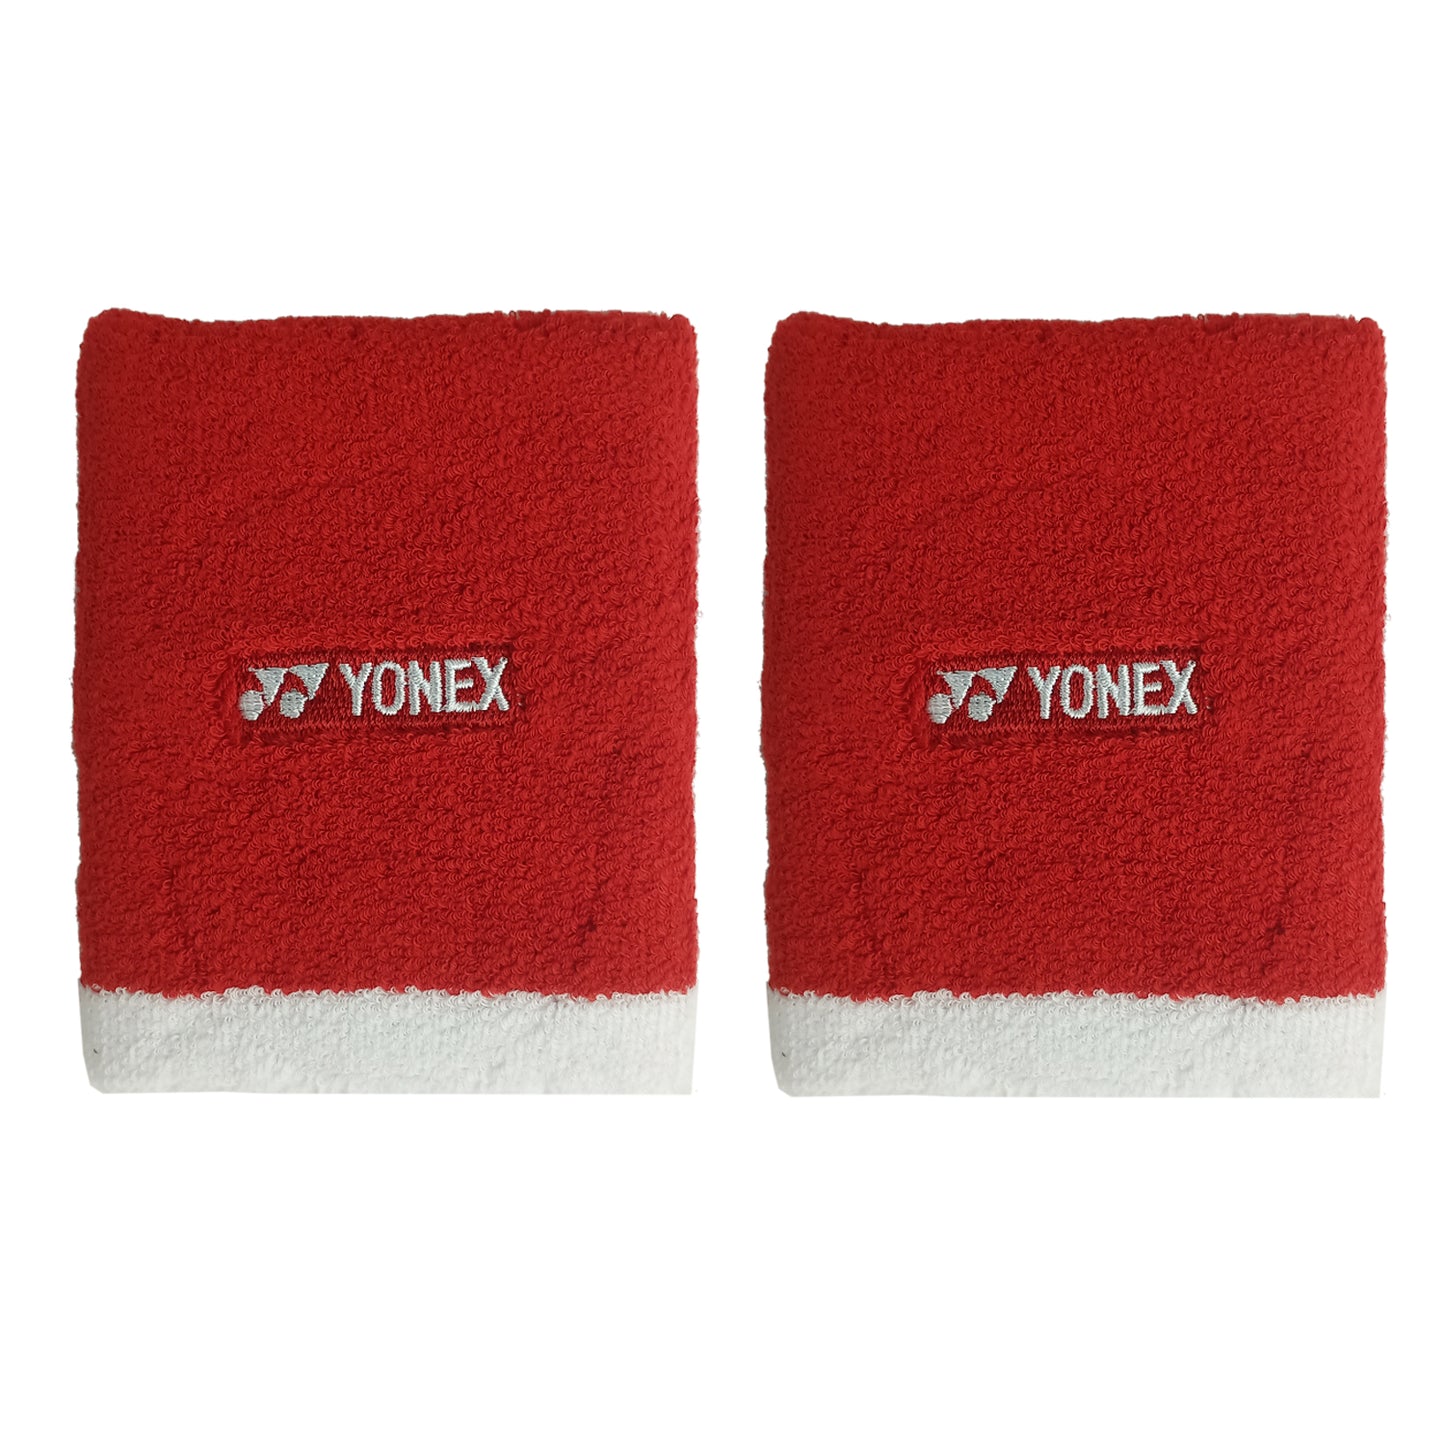 Yonex 11501 Wrist Band, Red/White (Pack of 2) - Best Price online Prokicksports.com